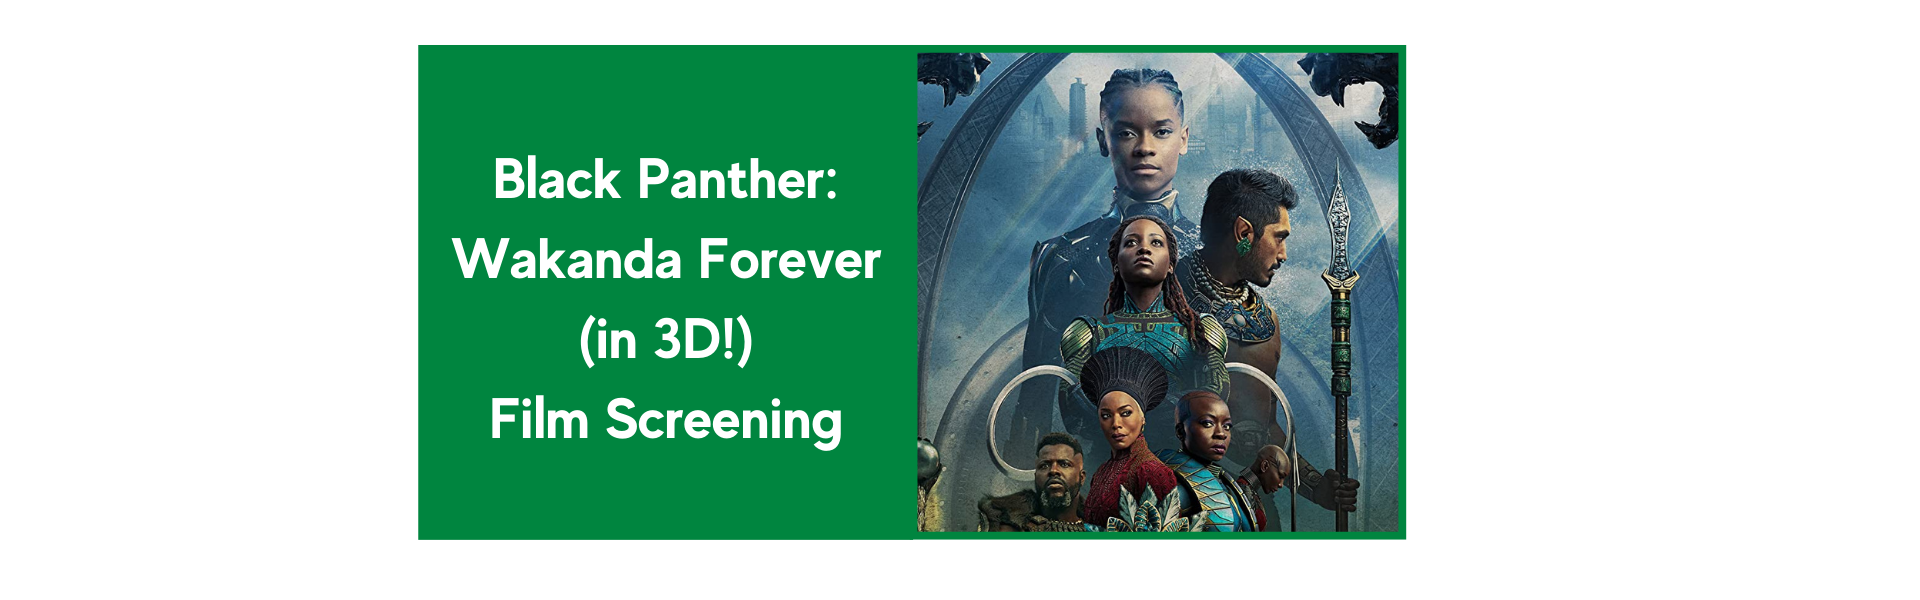 Black-Panther_-Wakanda-Forever-in-3D-Film-Screening.png